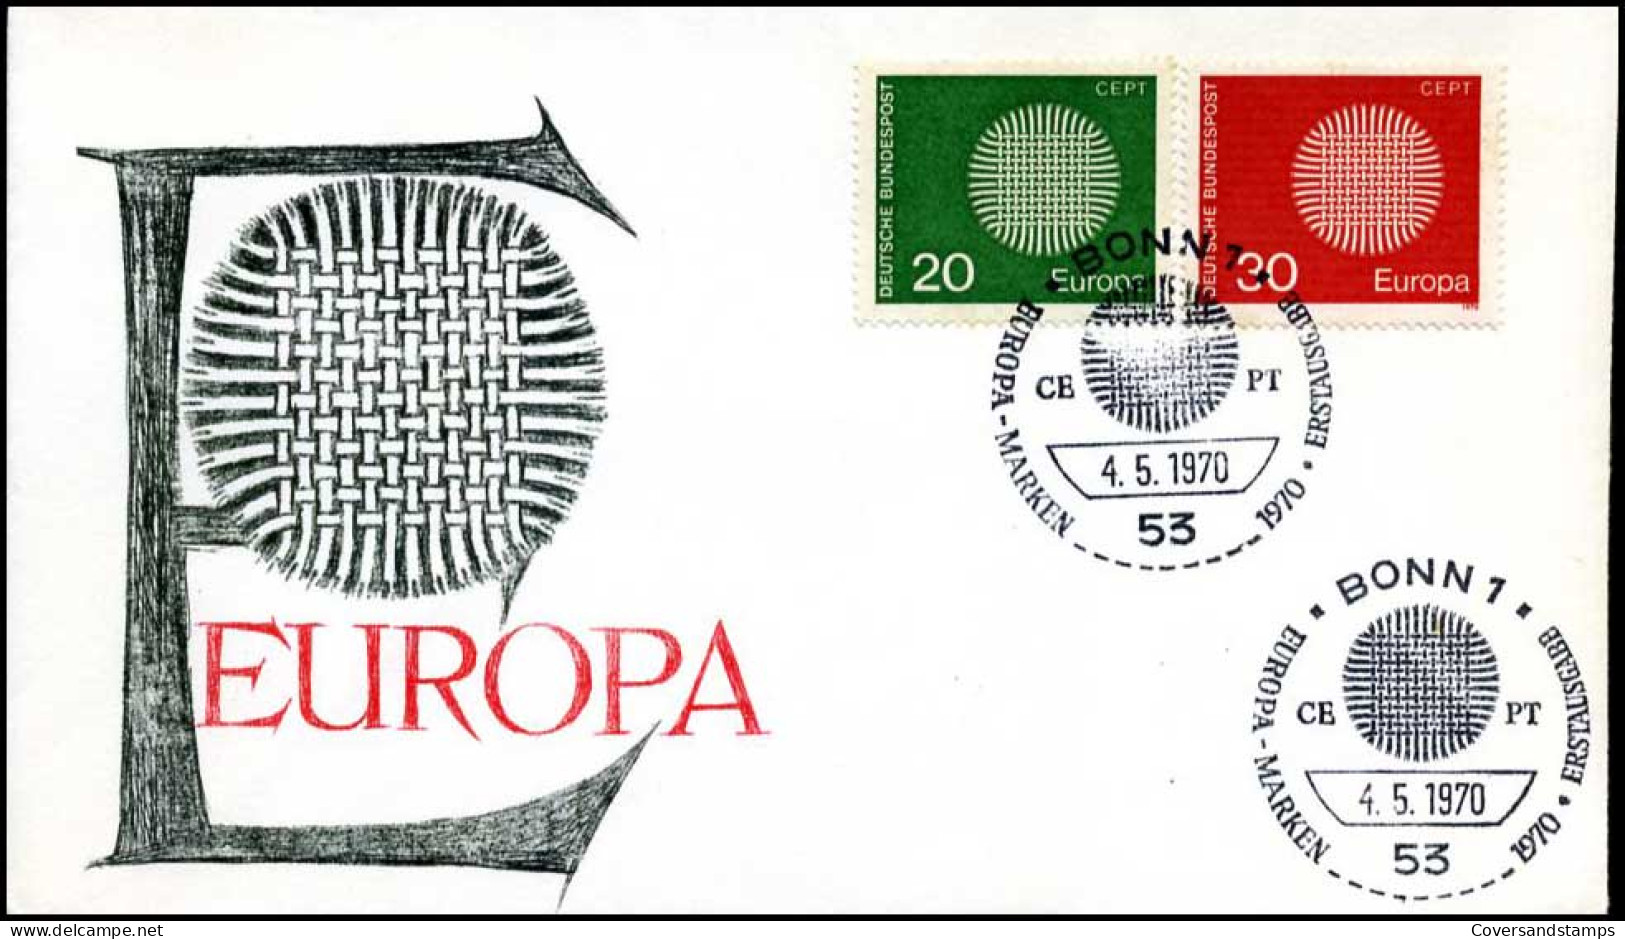  Bundespost - FDC - Europa CEPT 1970 - 1970